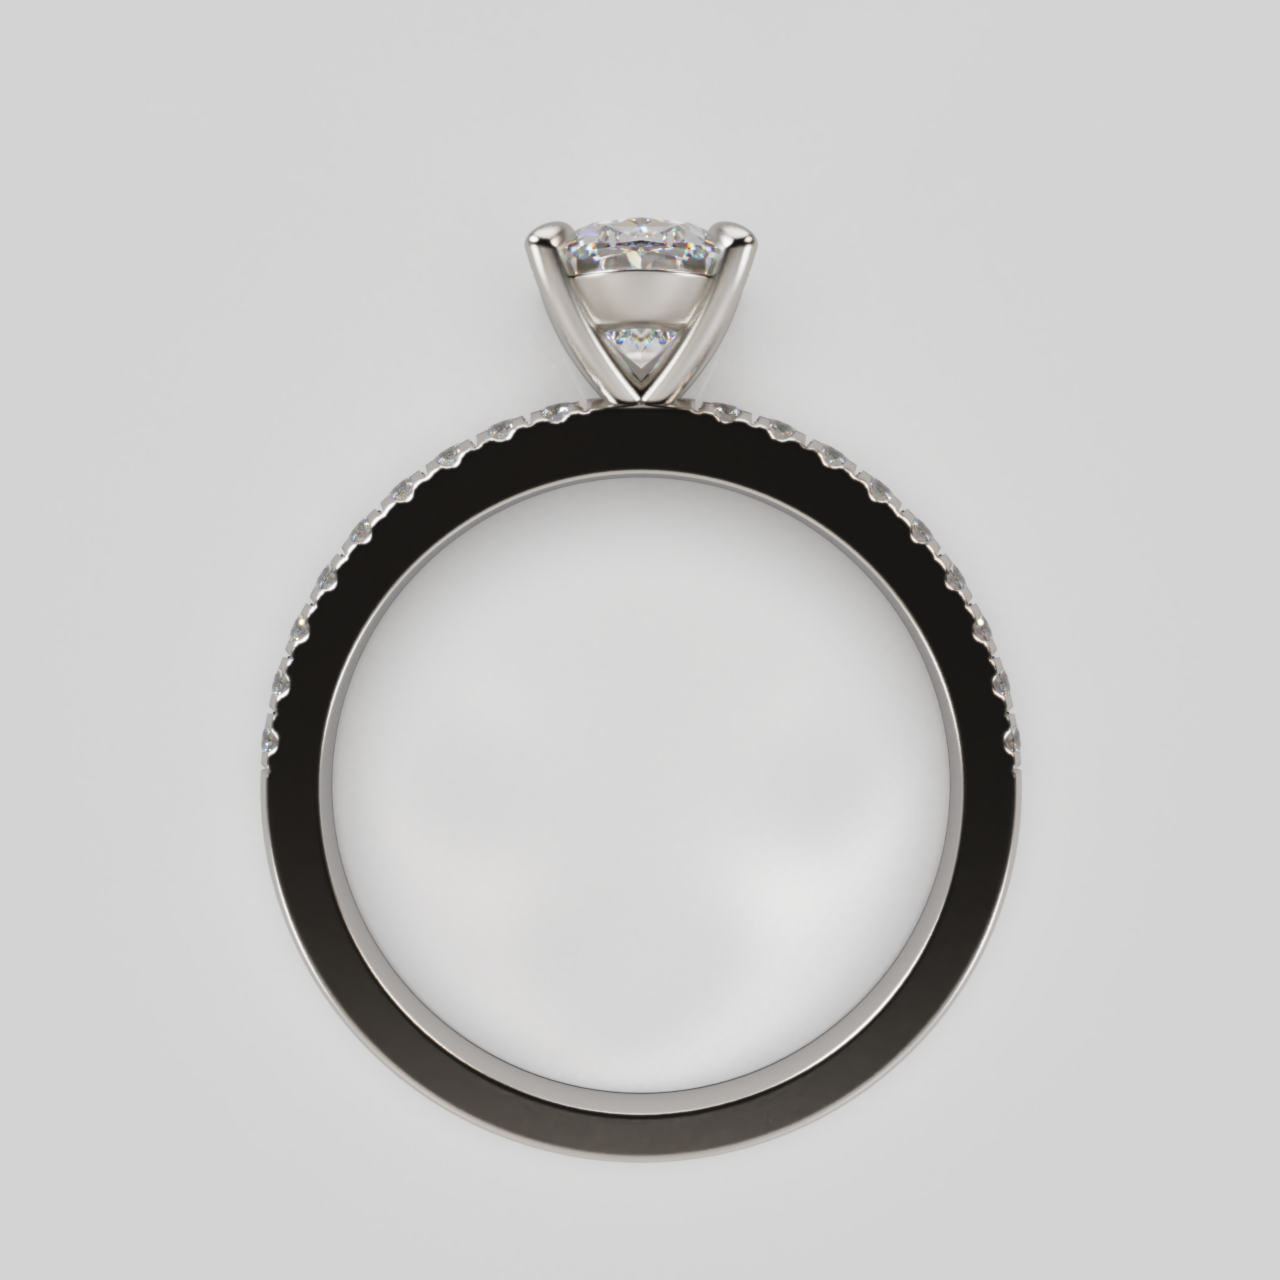 "Elsa" One Carat Oval Lab Grown Diamond Engagement Ring